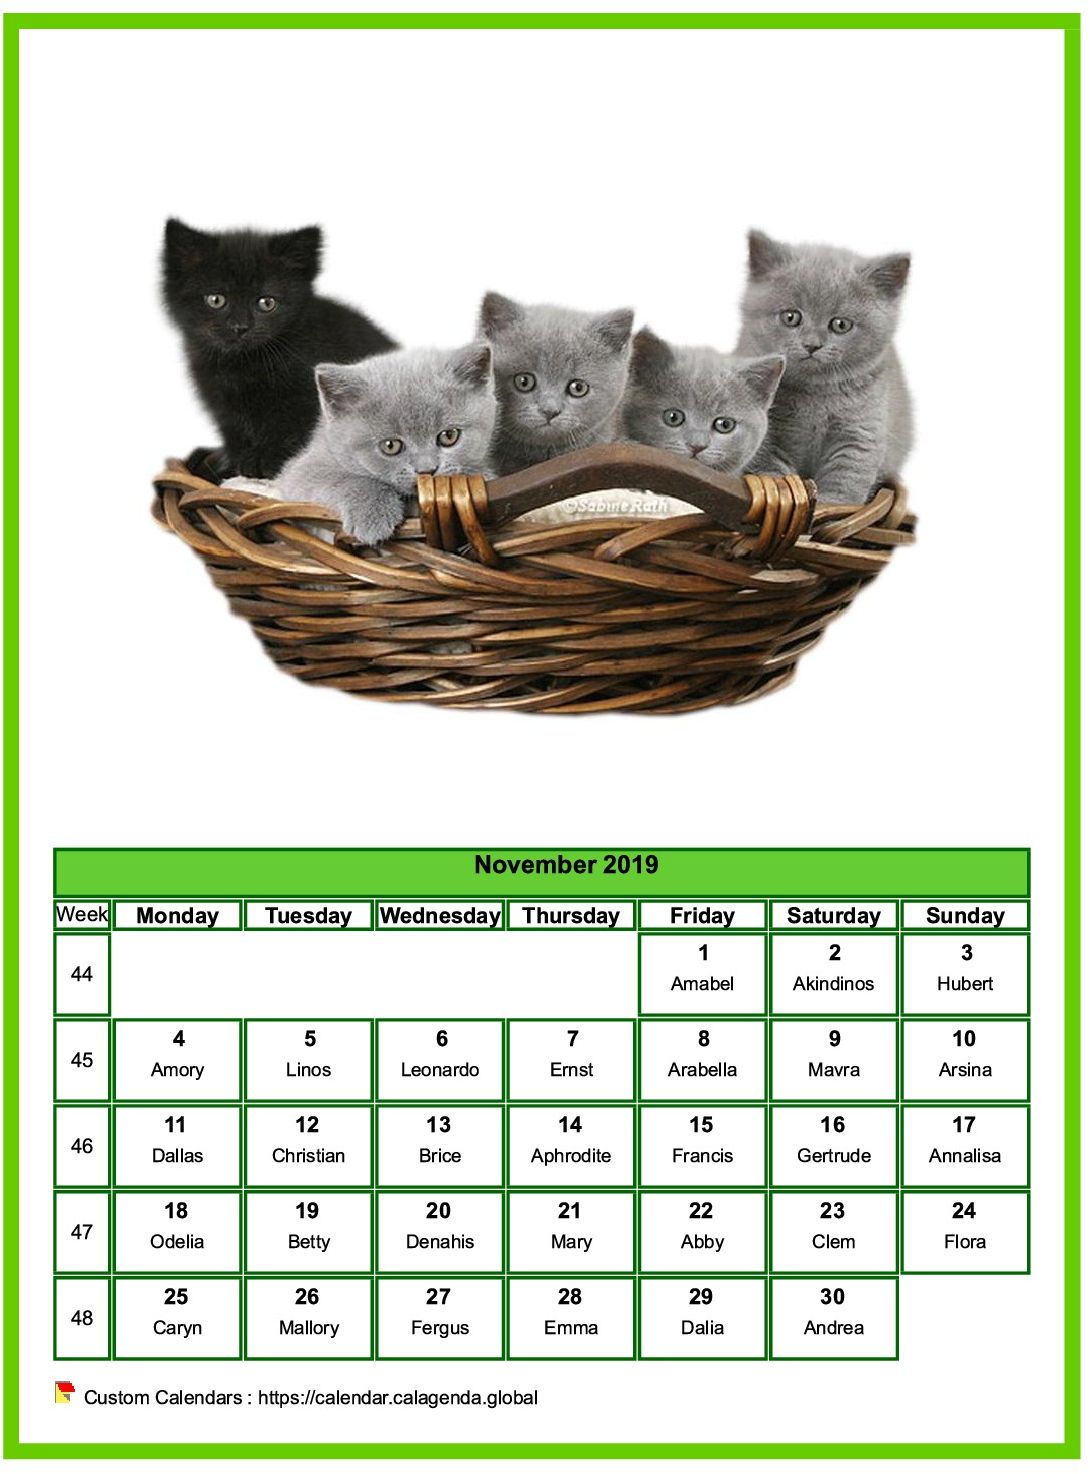 Calendar november 2019 cats